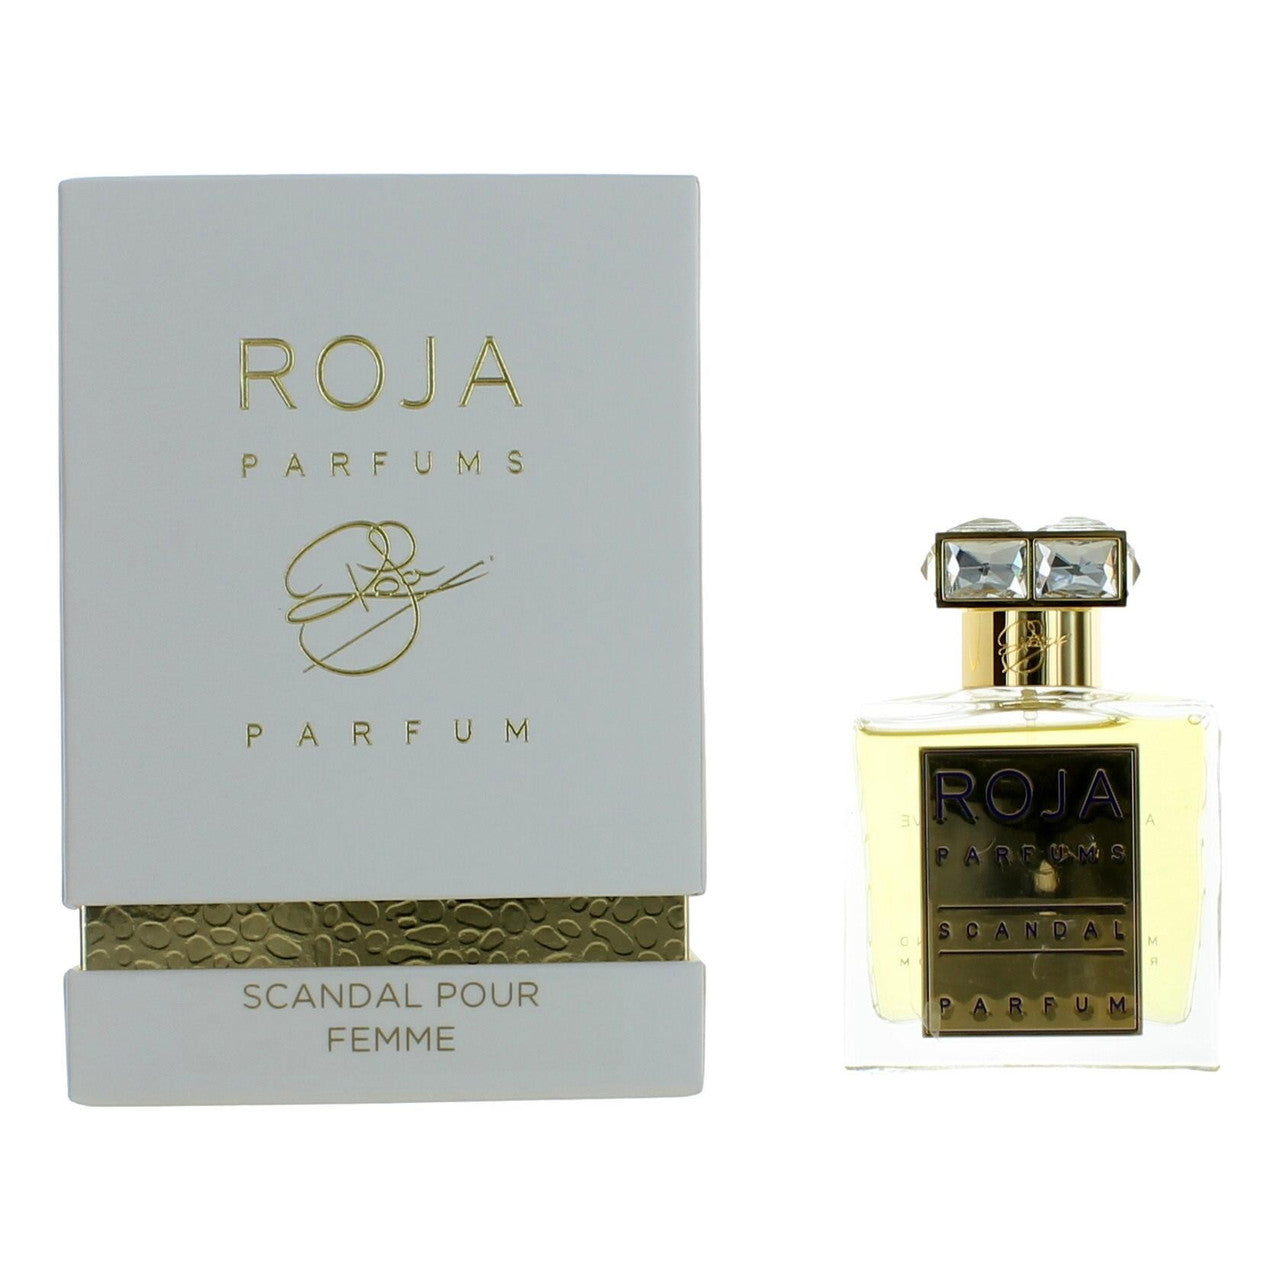 1.7 oz bottle of Scandal Pour Femme by Roja Parfums